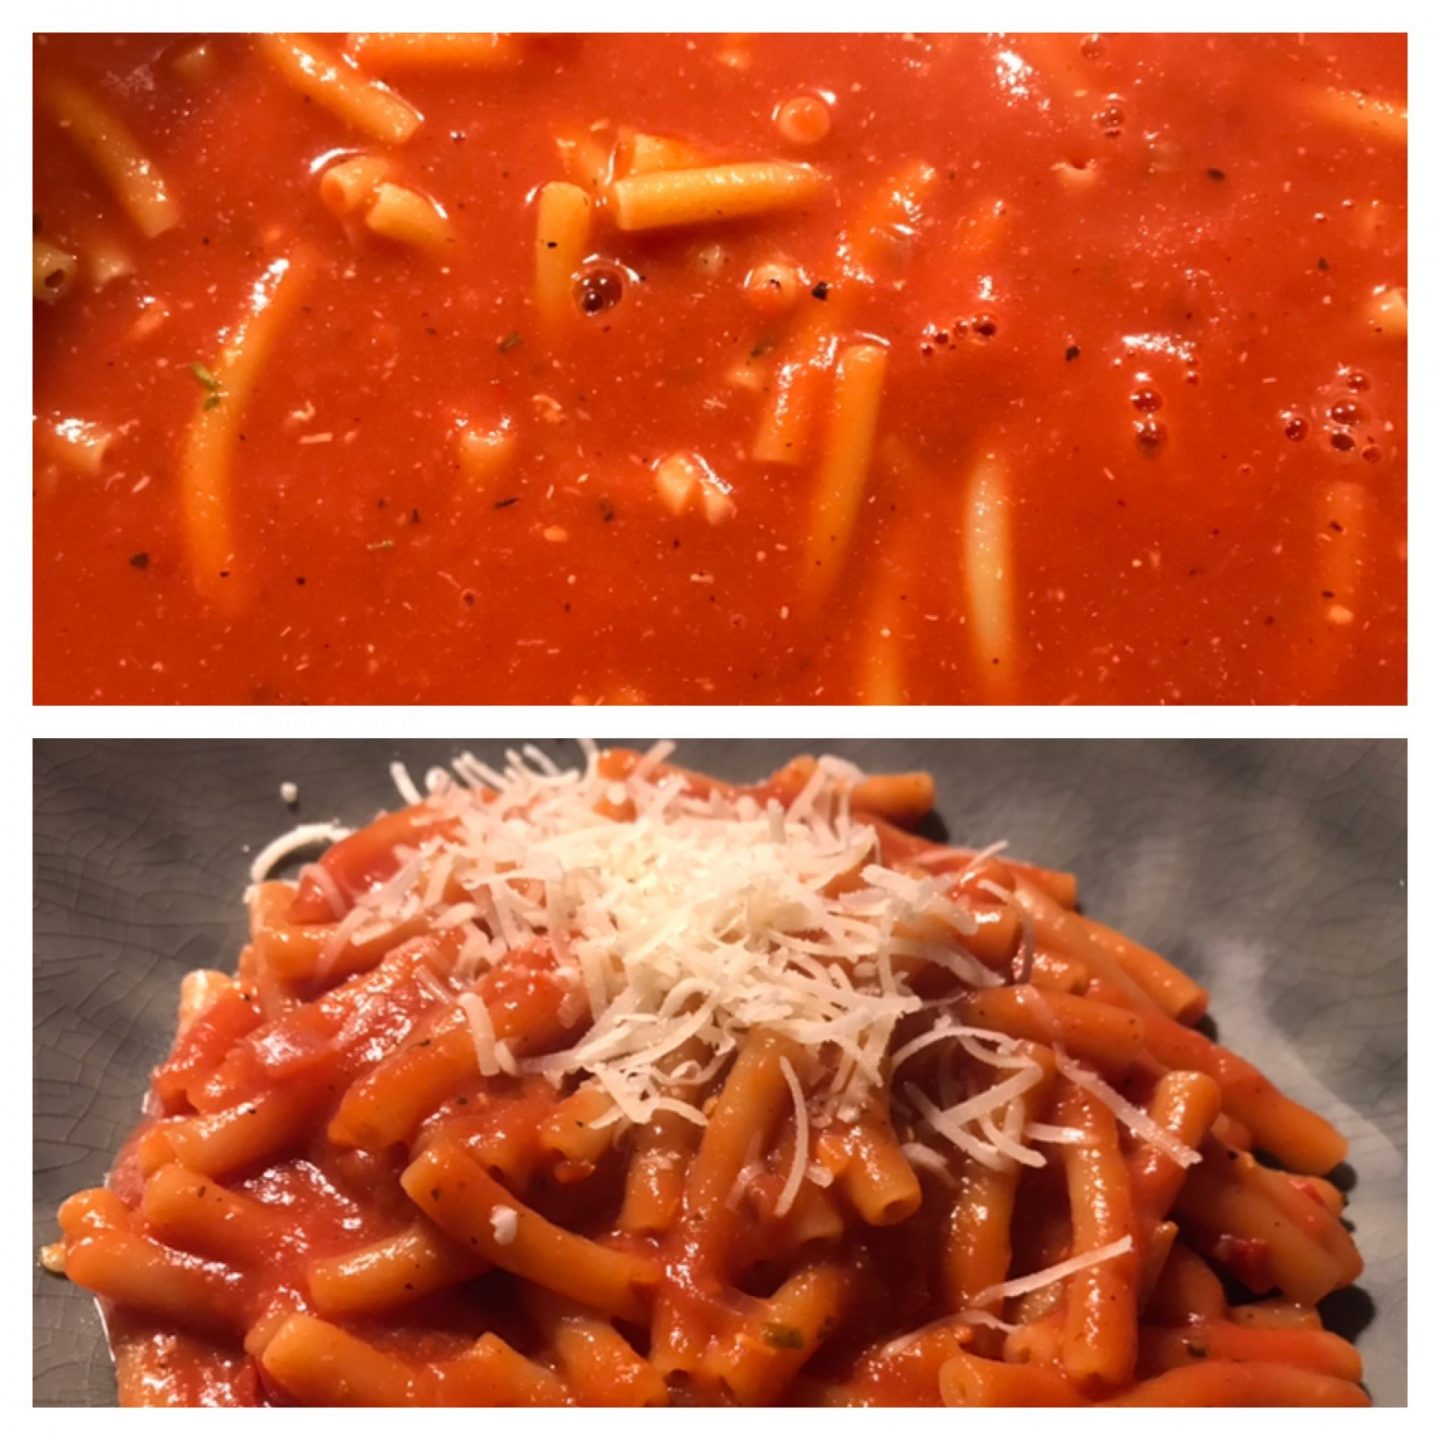 Testpaket Tomaten Mutti Foodblog Sternestulle